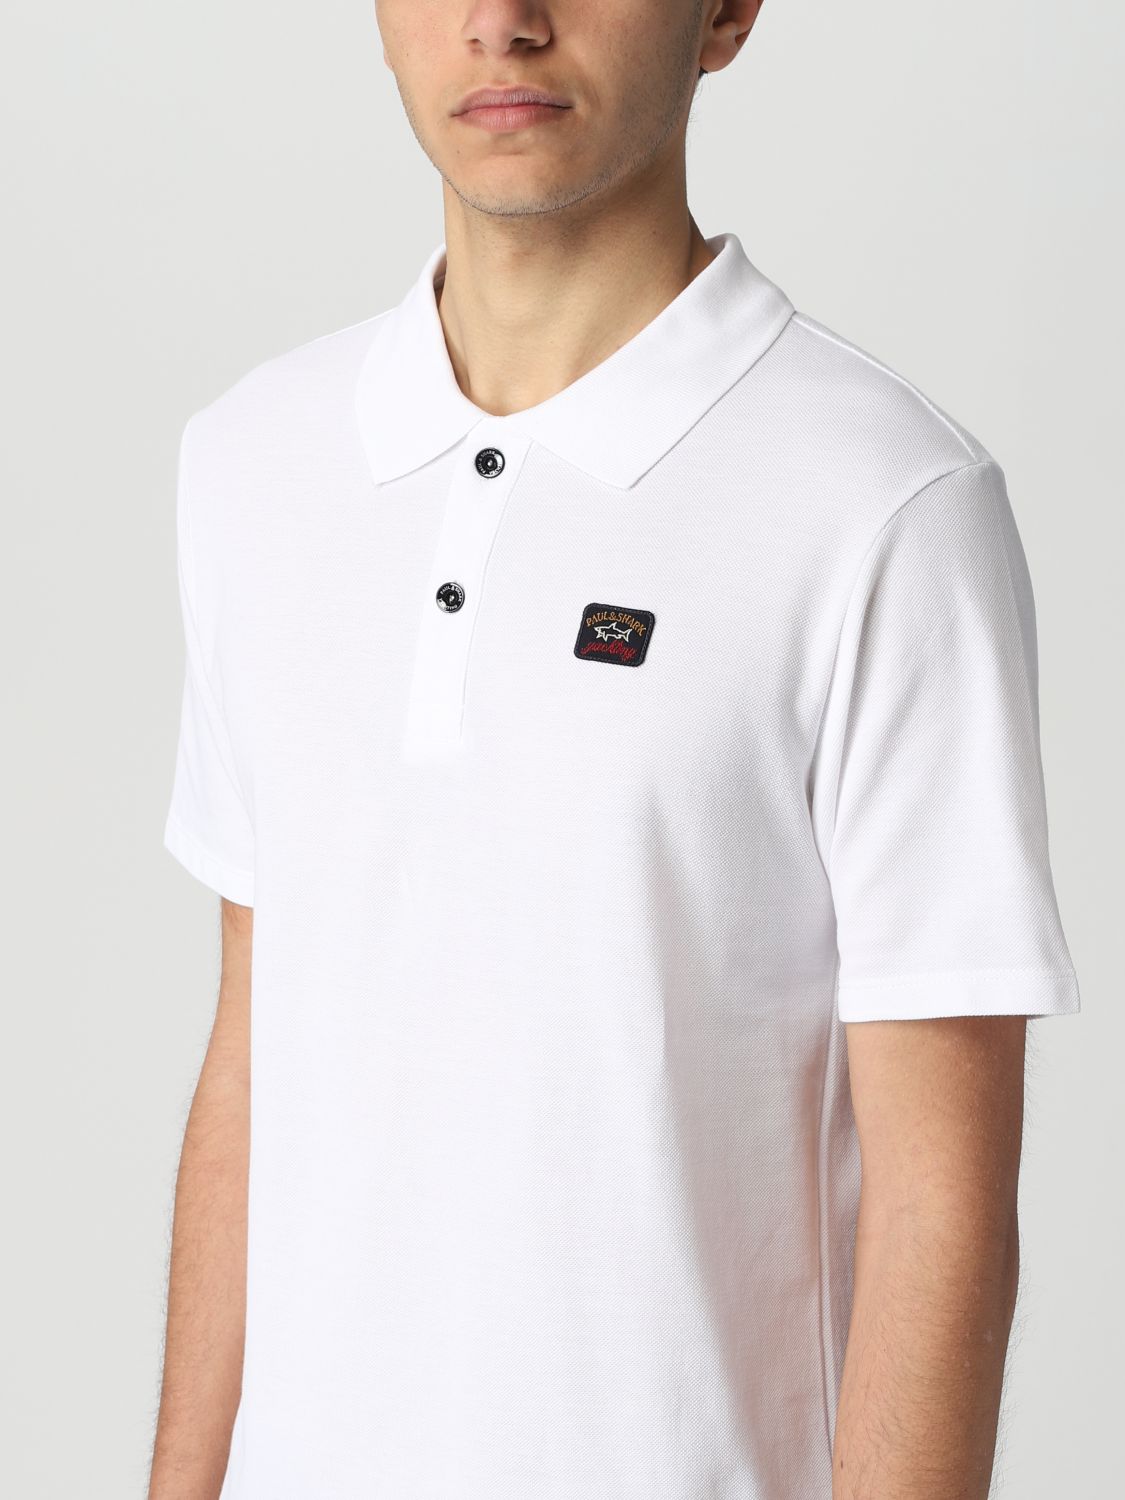 PAUL & SHARK: polo shirt for men - White | Paul & Shark polo shirt ...